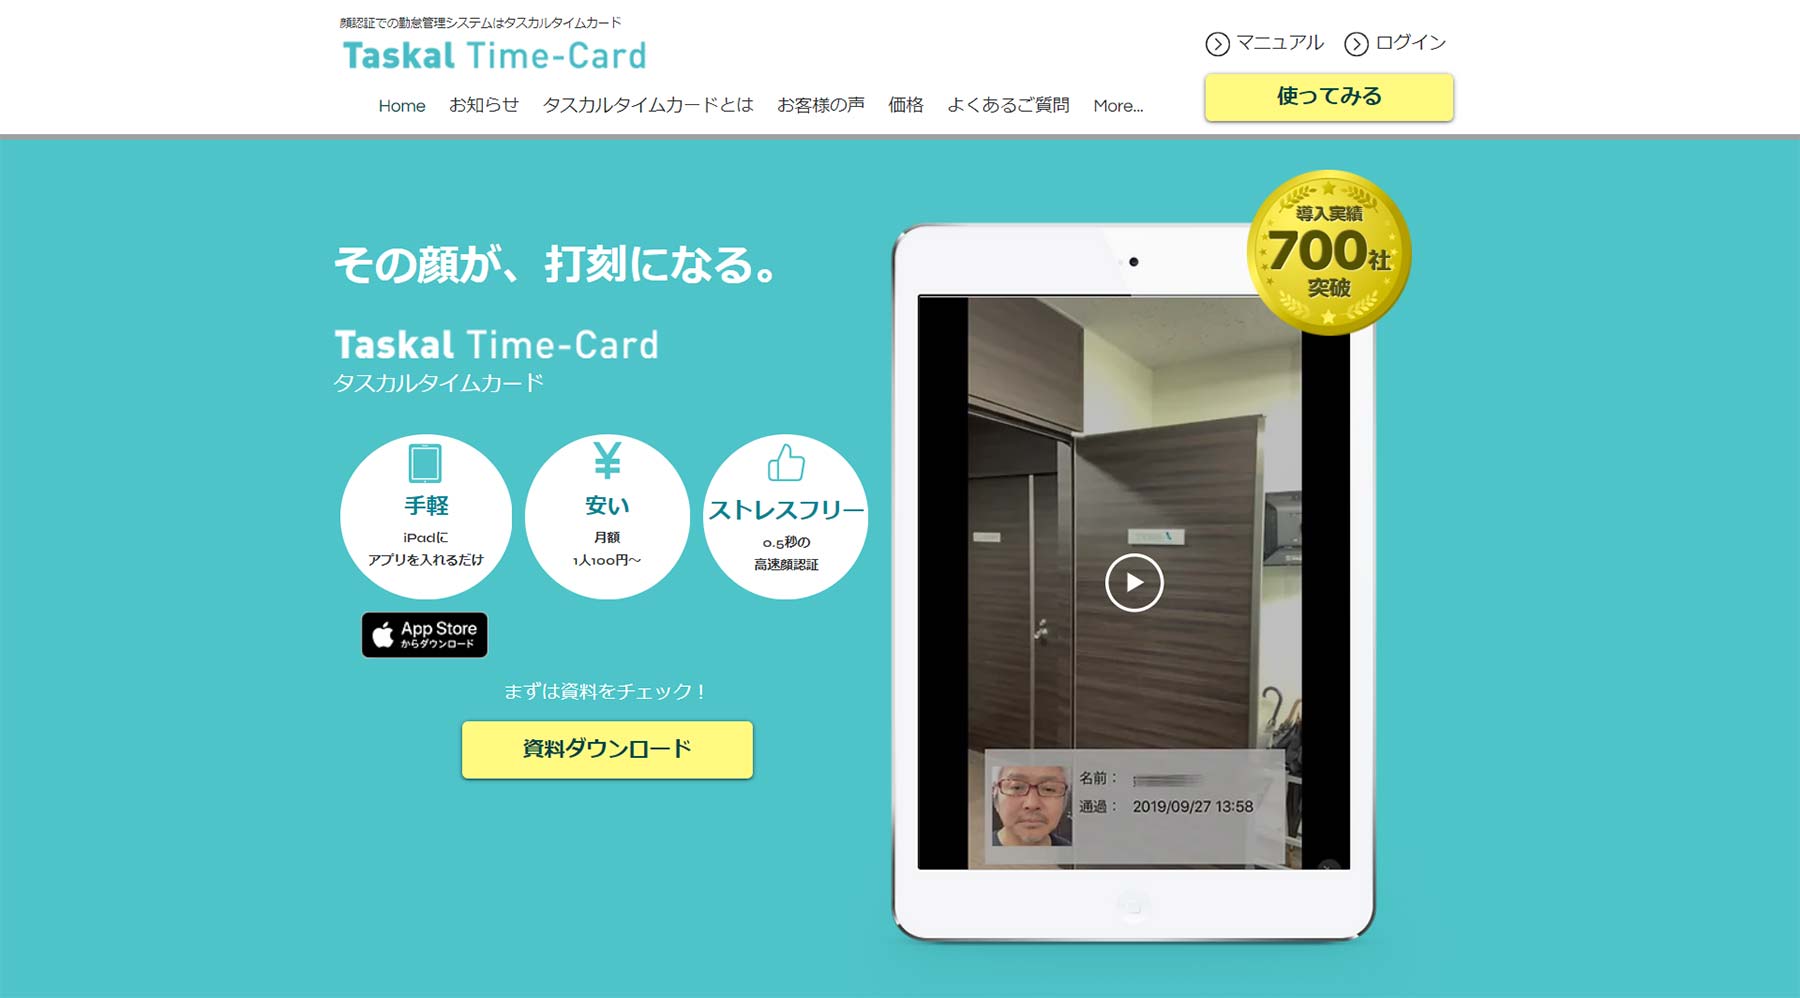 Taskal Time-Card公式Webサイト